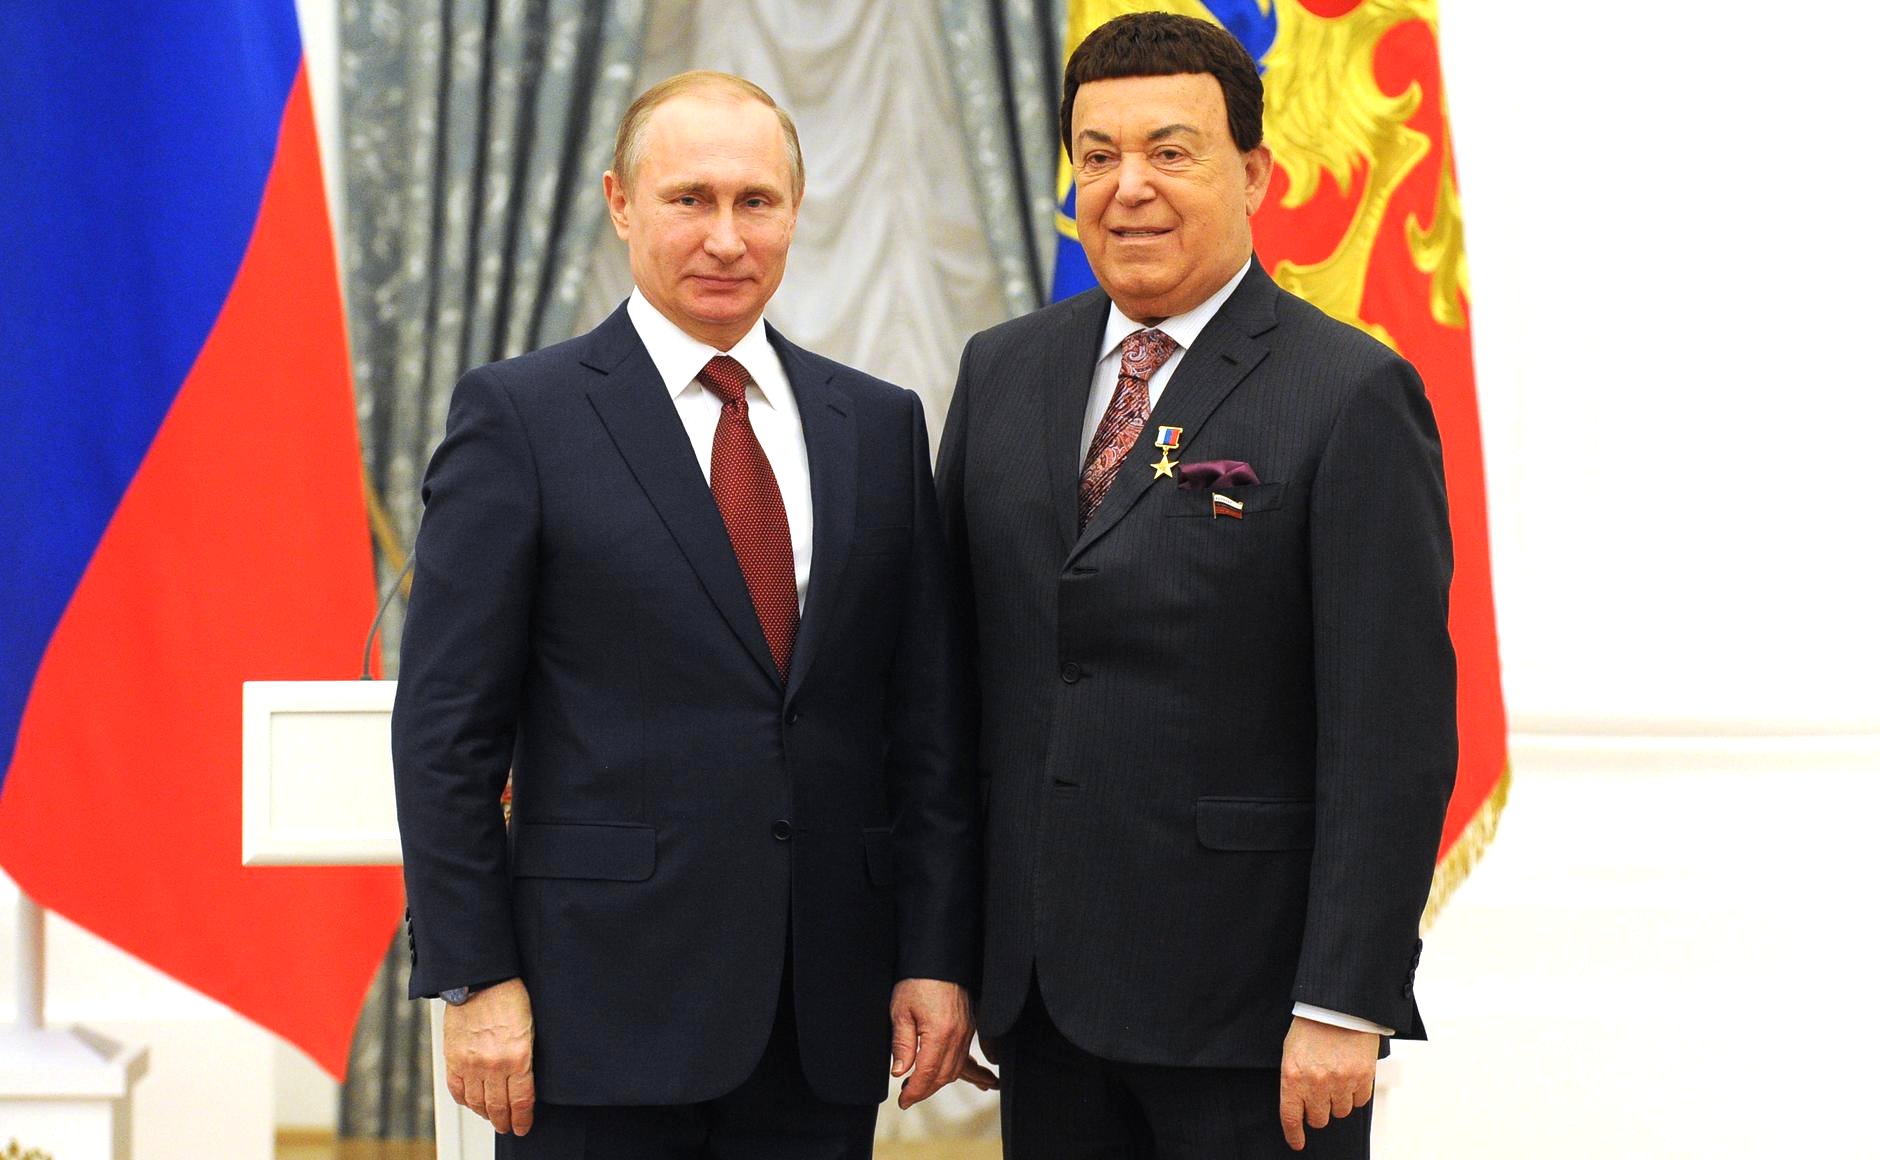 Иосиф Кобзон и Владимир Путин. Фото: пресс-служба Кремля